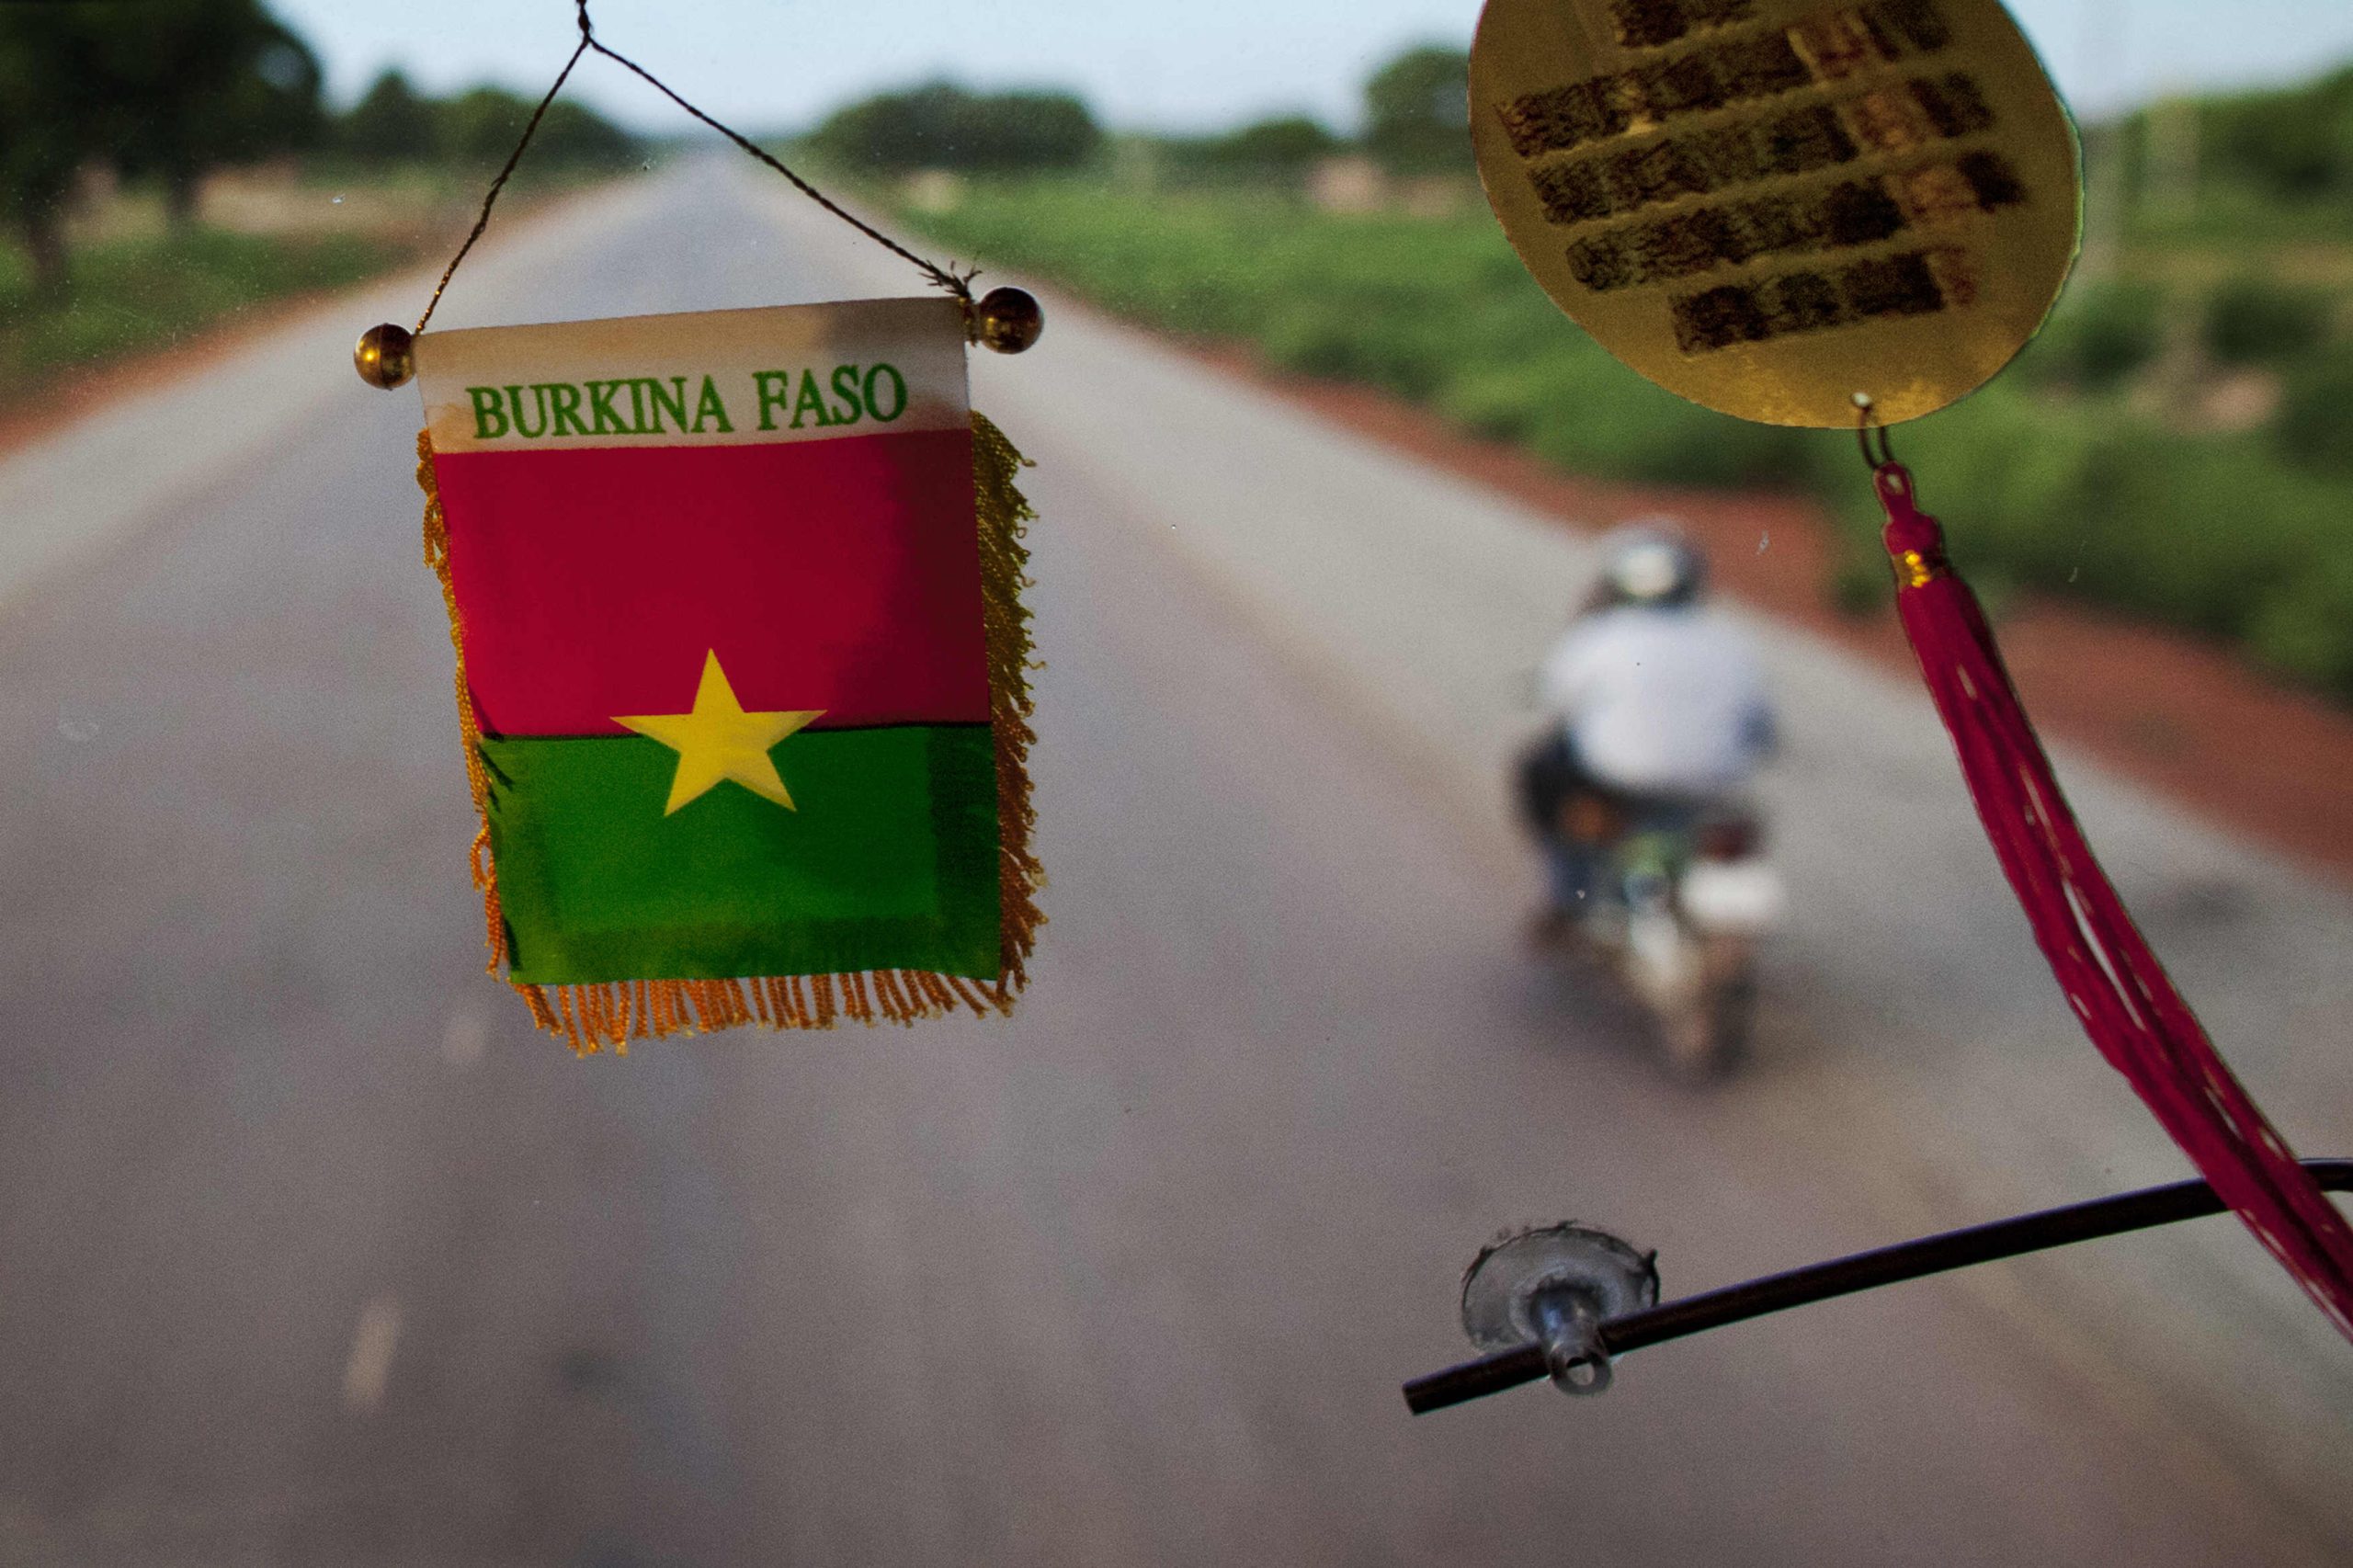 Burkina Faso’s 2022 budget: health accounts for 4.93% of the budget